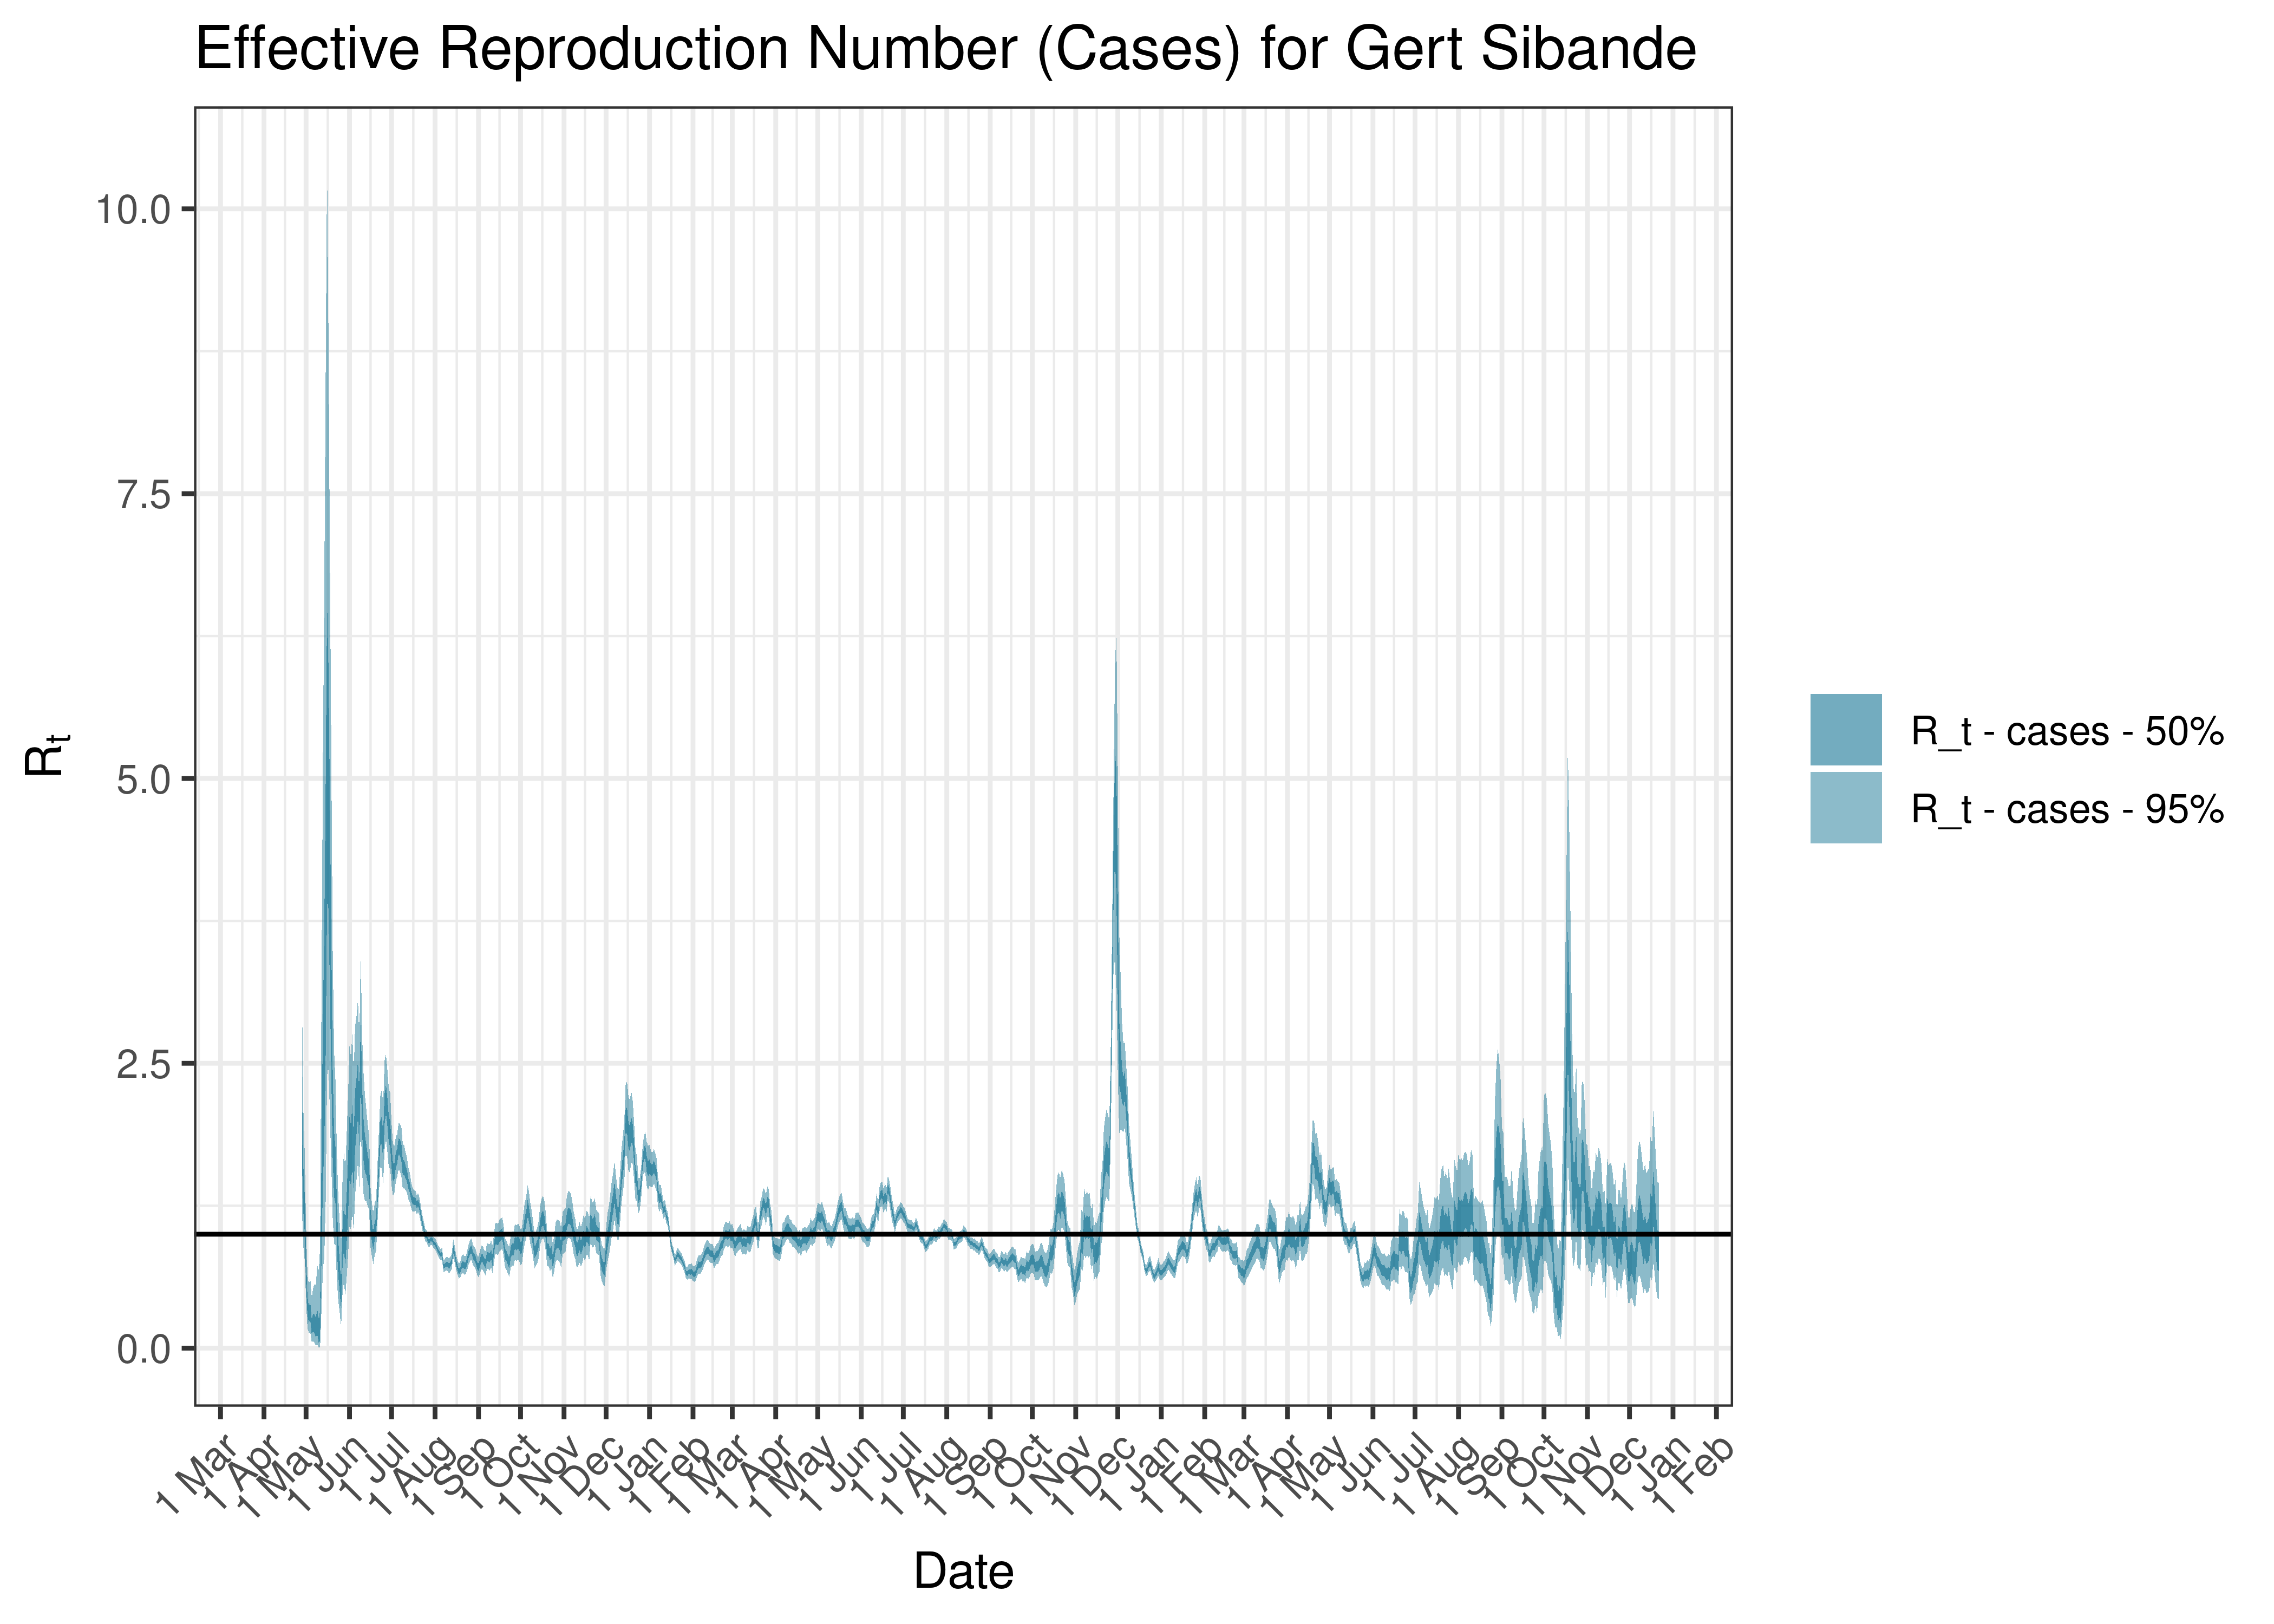 Estimated Effective Reproduction Number Based on Cases for Gert Sibande since 1 April 2020